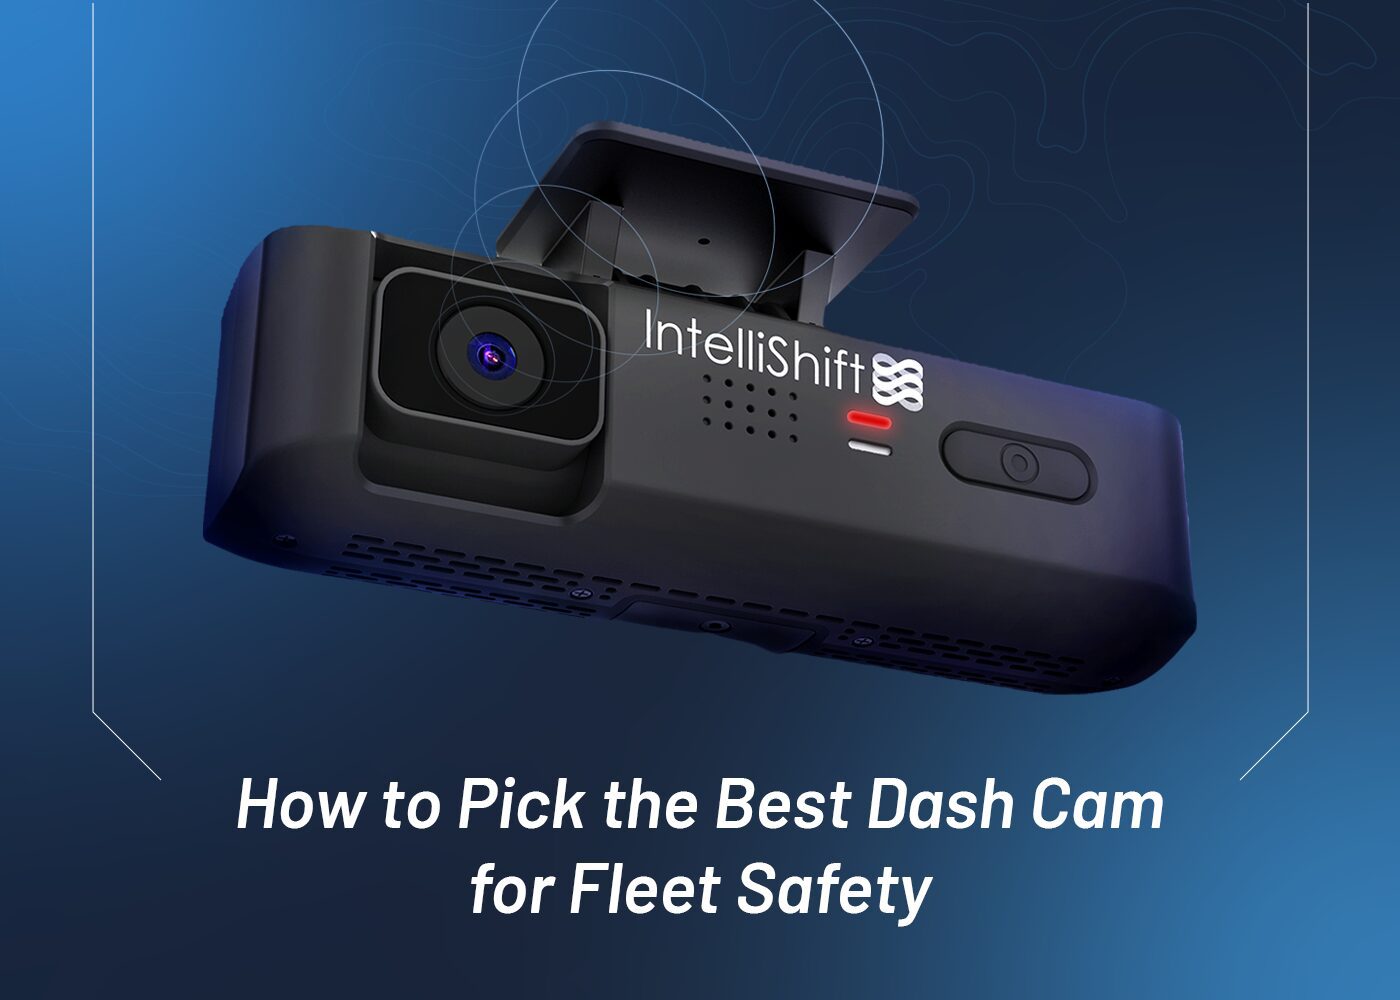 The best dash cam